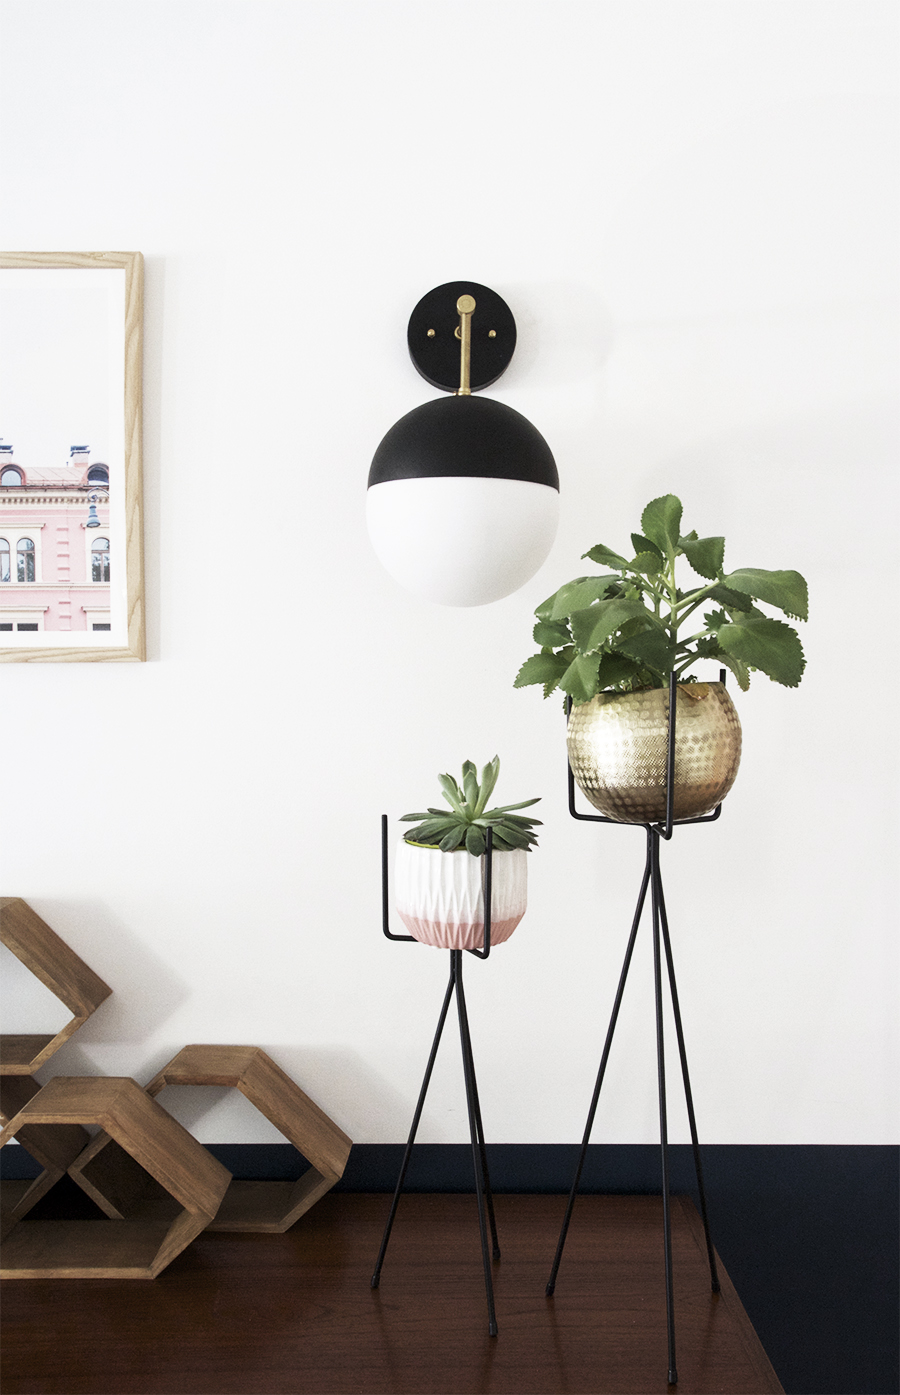 Instructions and Parts list for minimalist DIY Brass & Black Globe Light Fixture